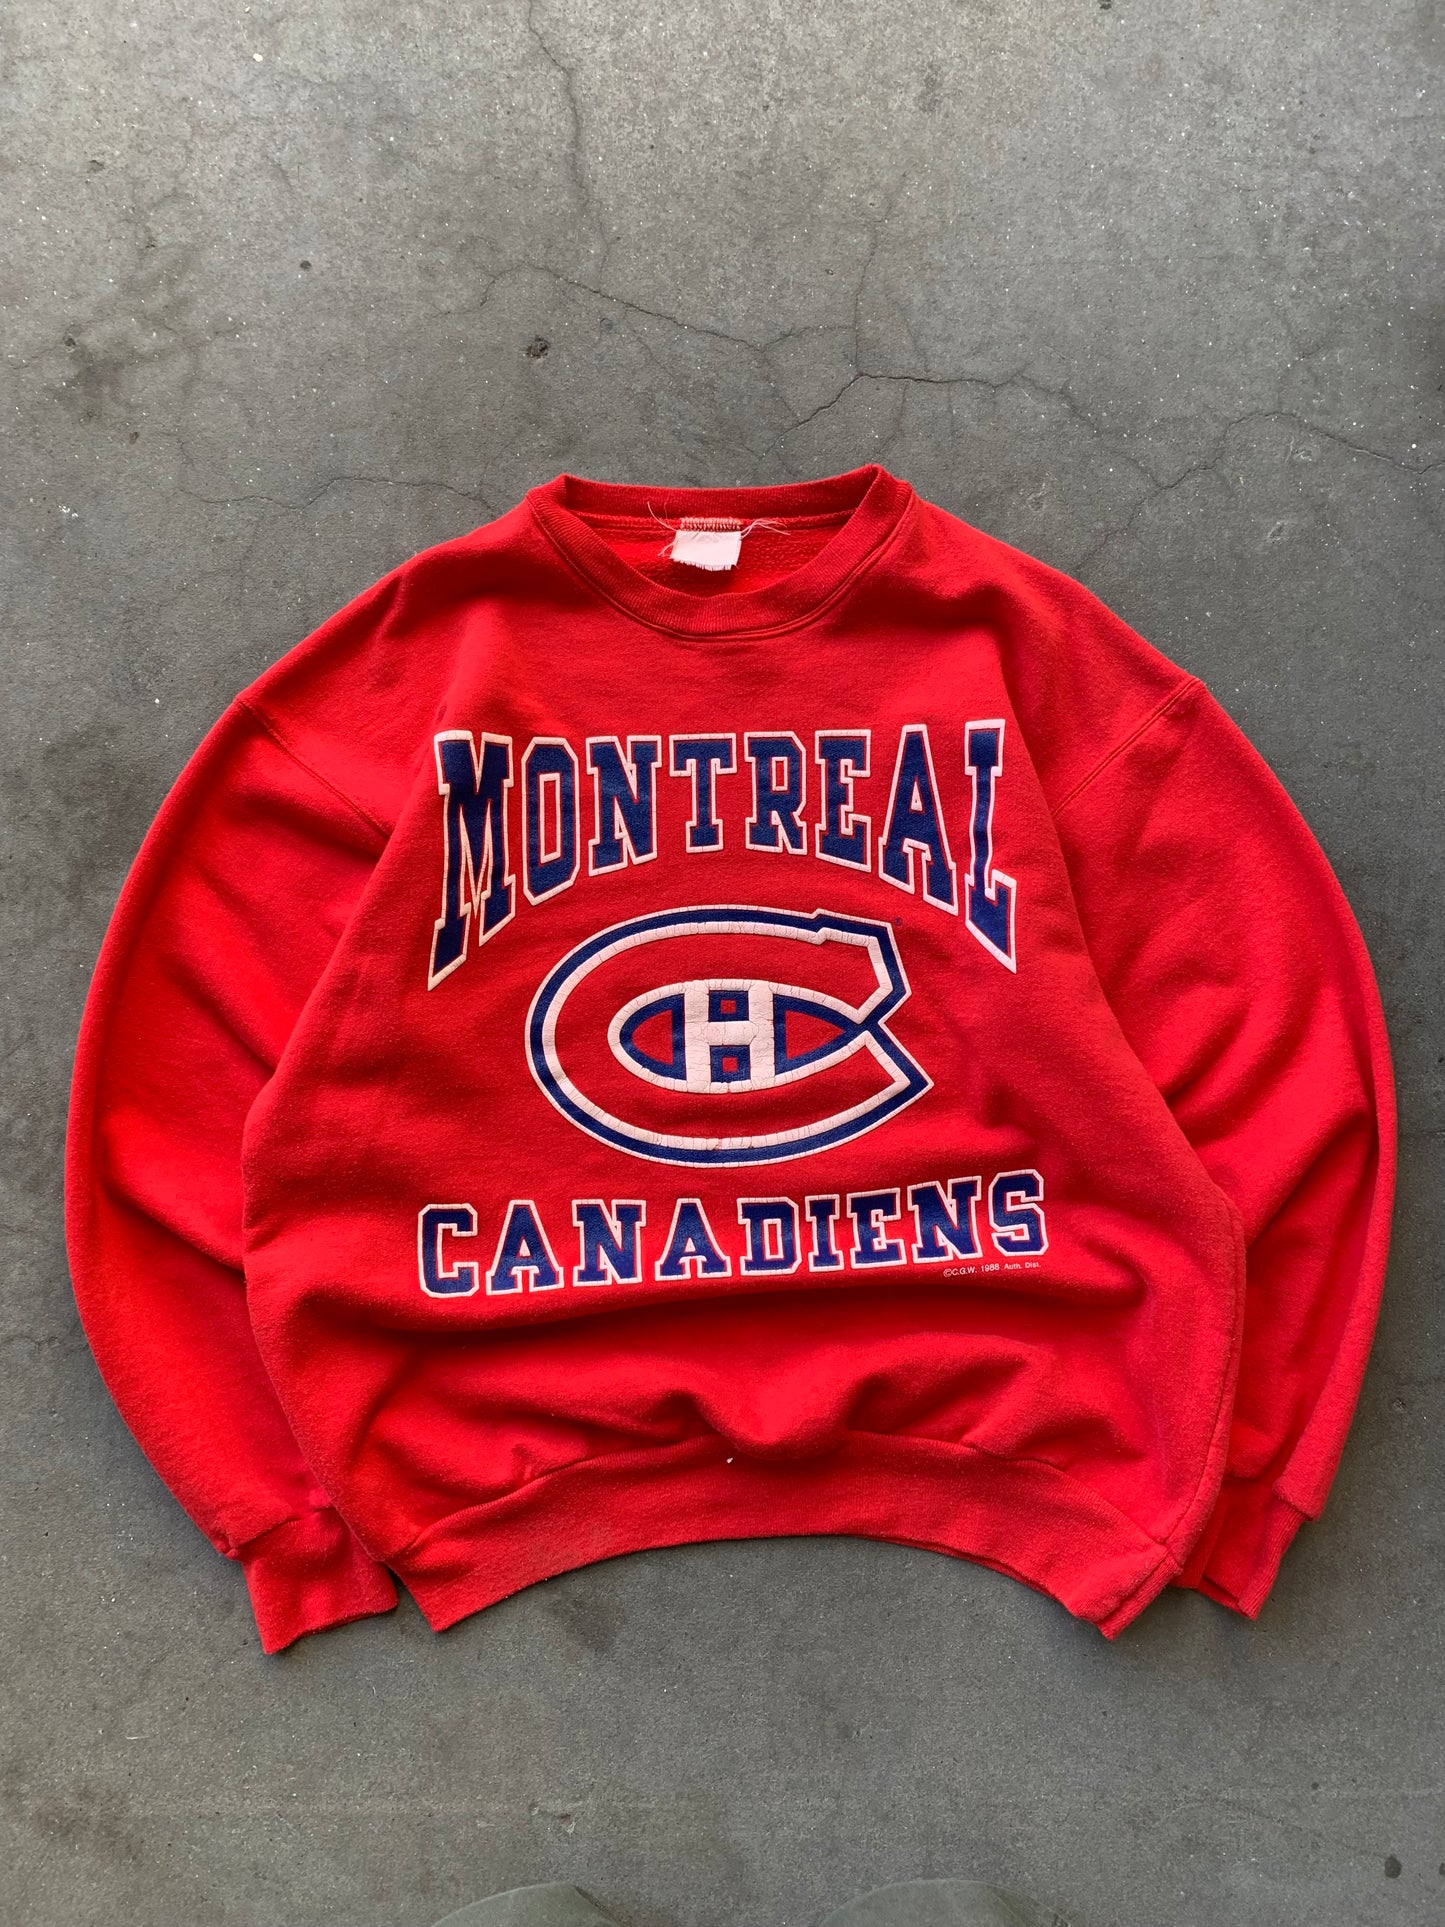 (S/M) 1988 Montreal Canadiens NHL Crewneck